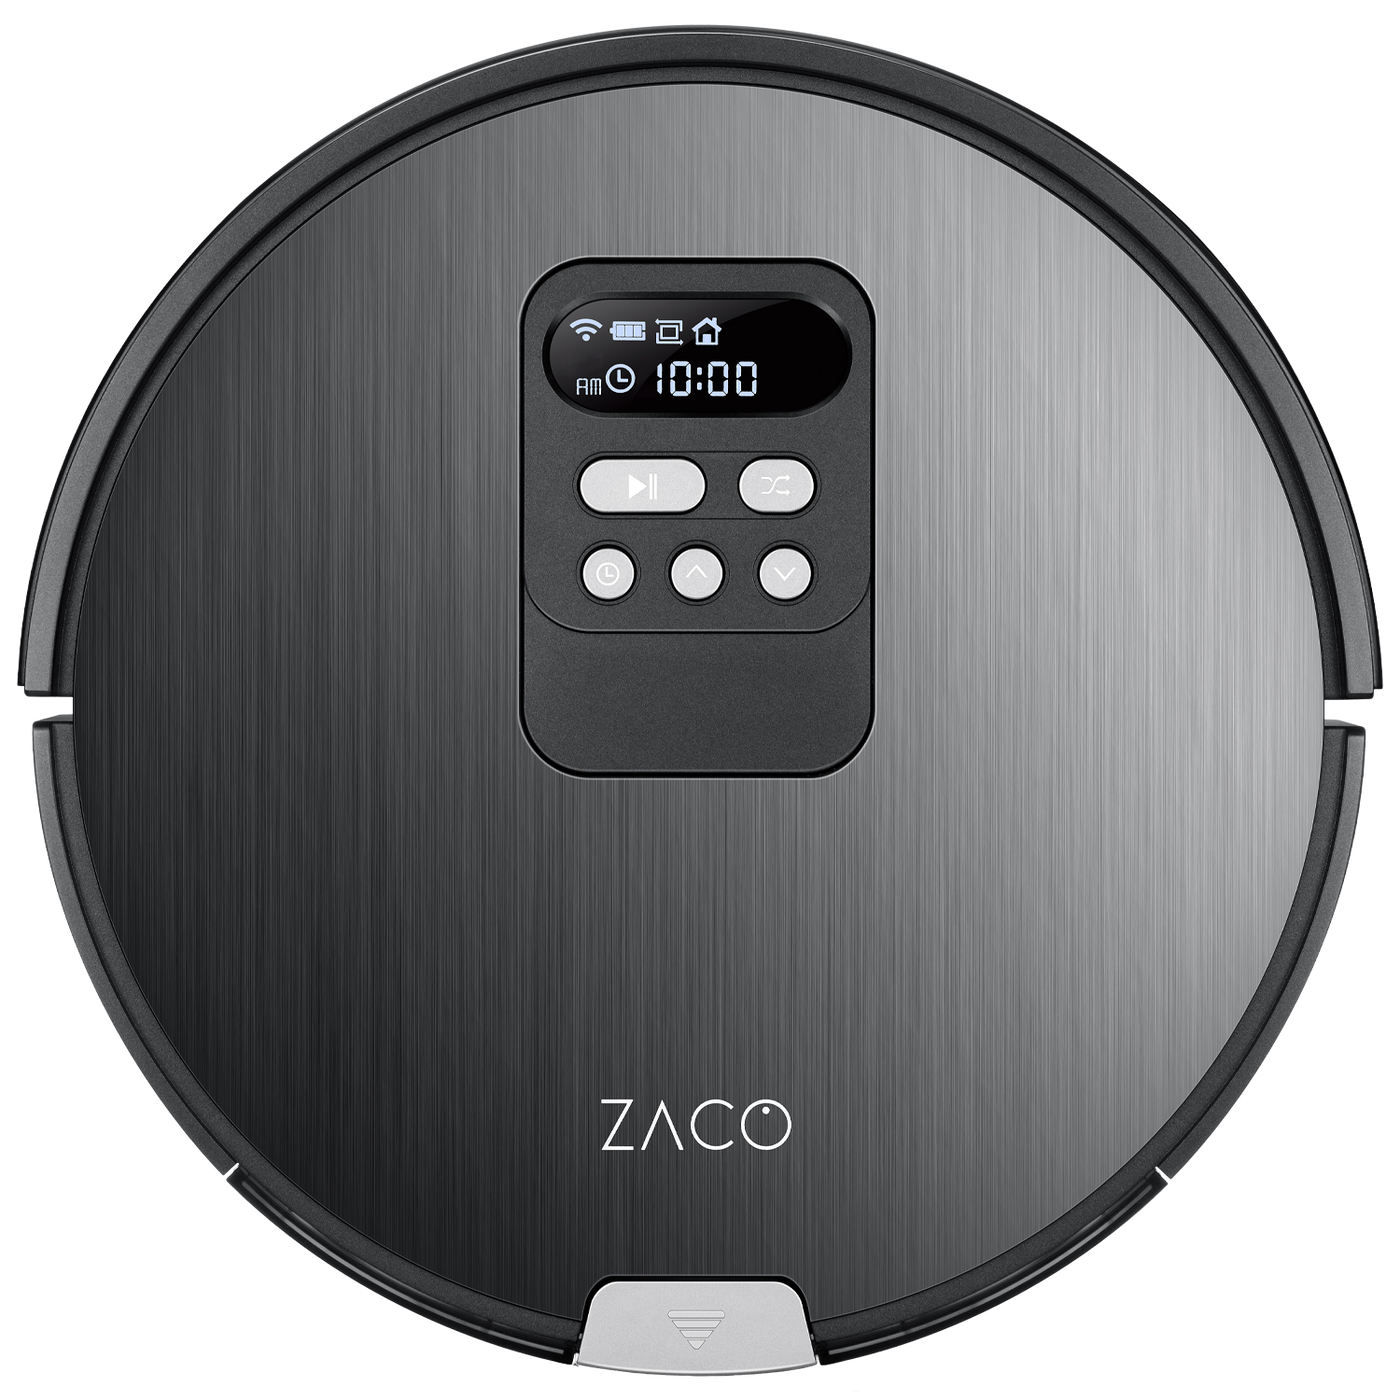 ZACO V85 vacuuming and mopping robot